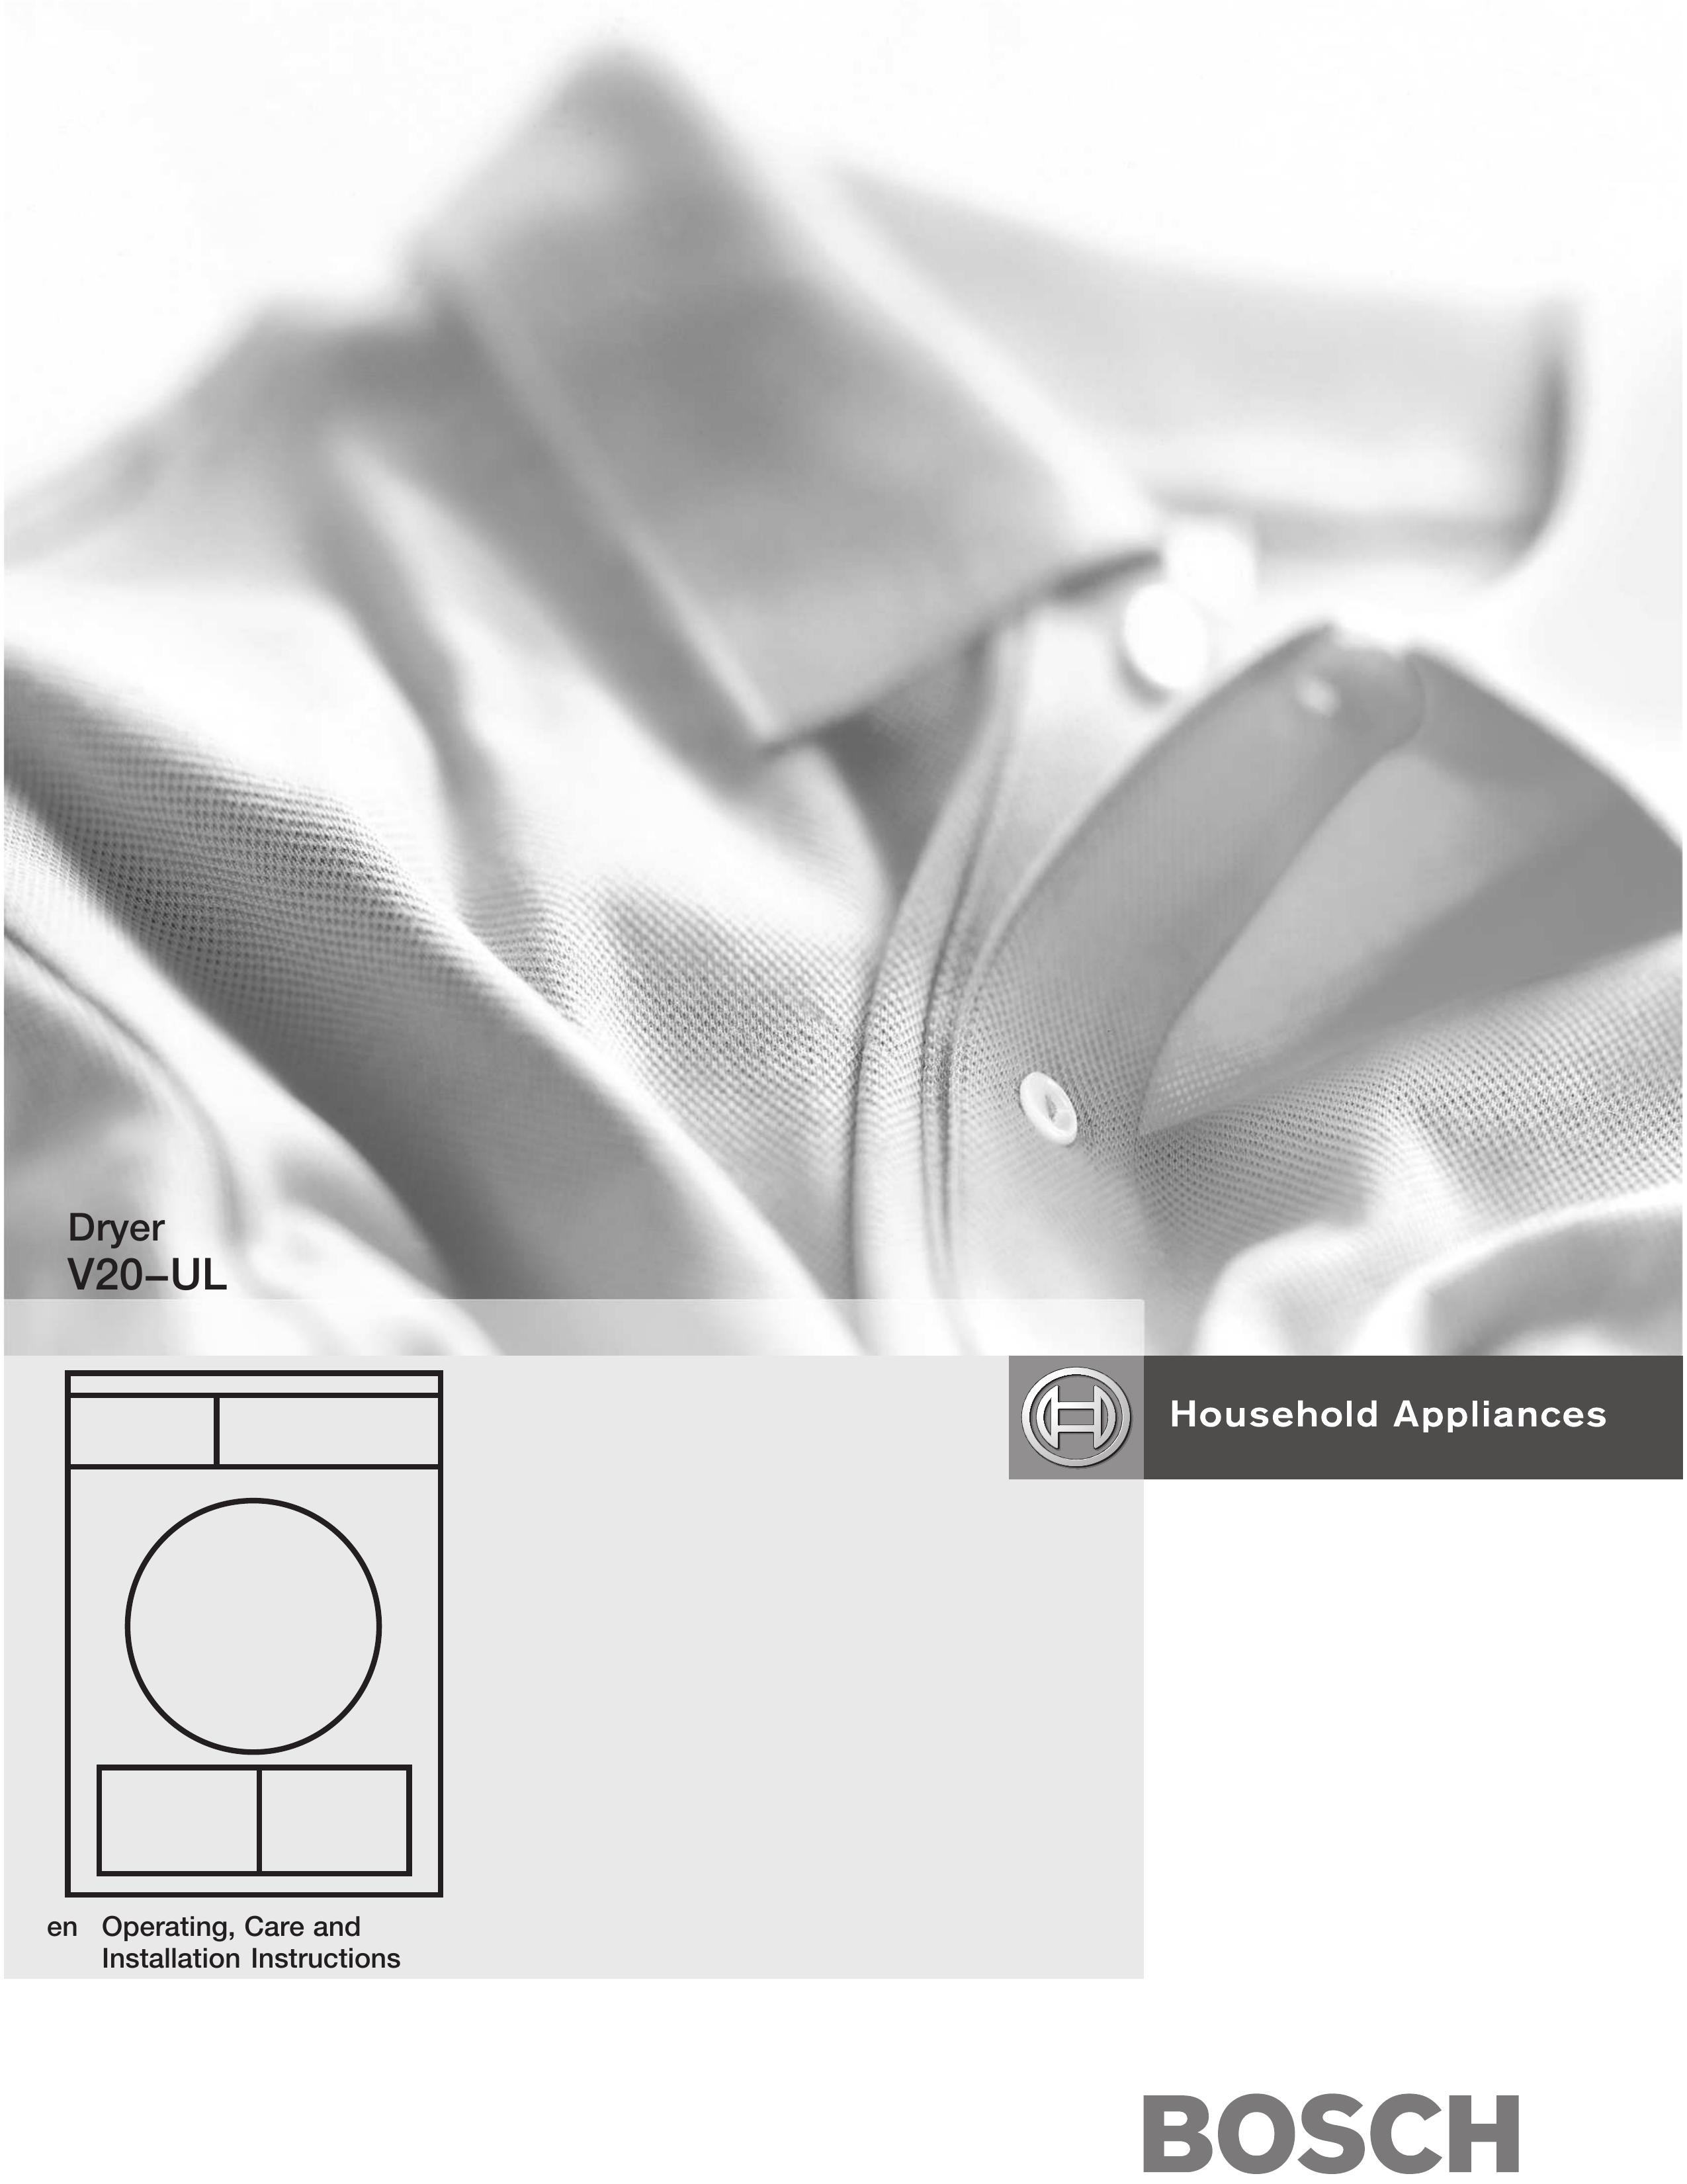 Bosch Appliances V20-UL Clothes Dryer User Manual